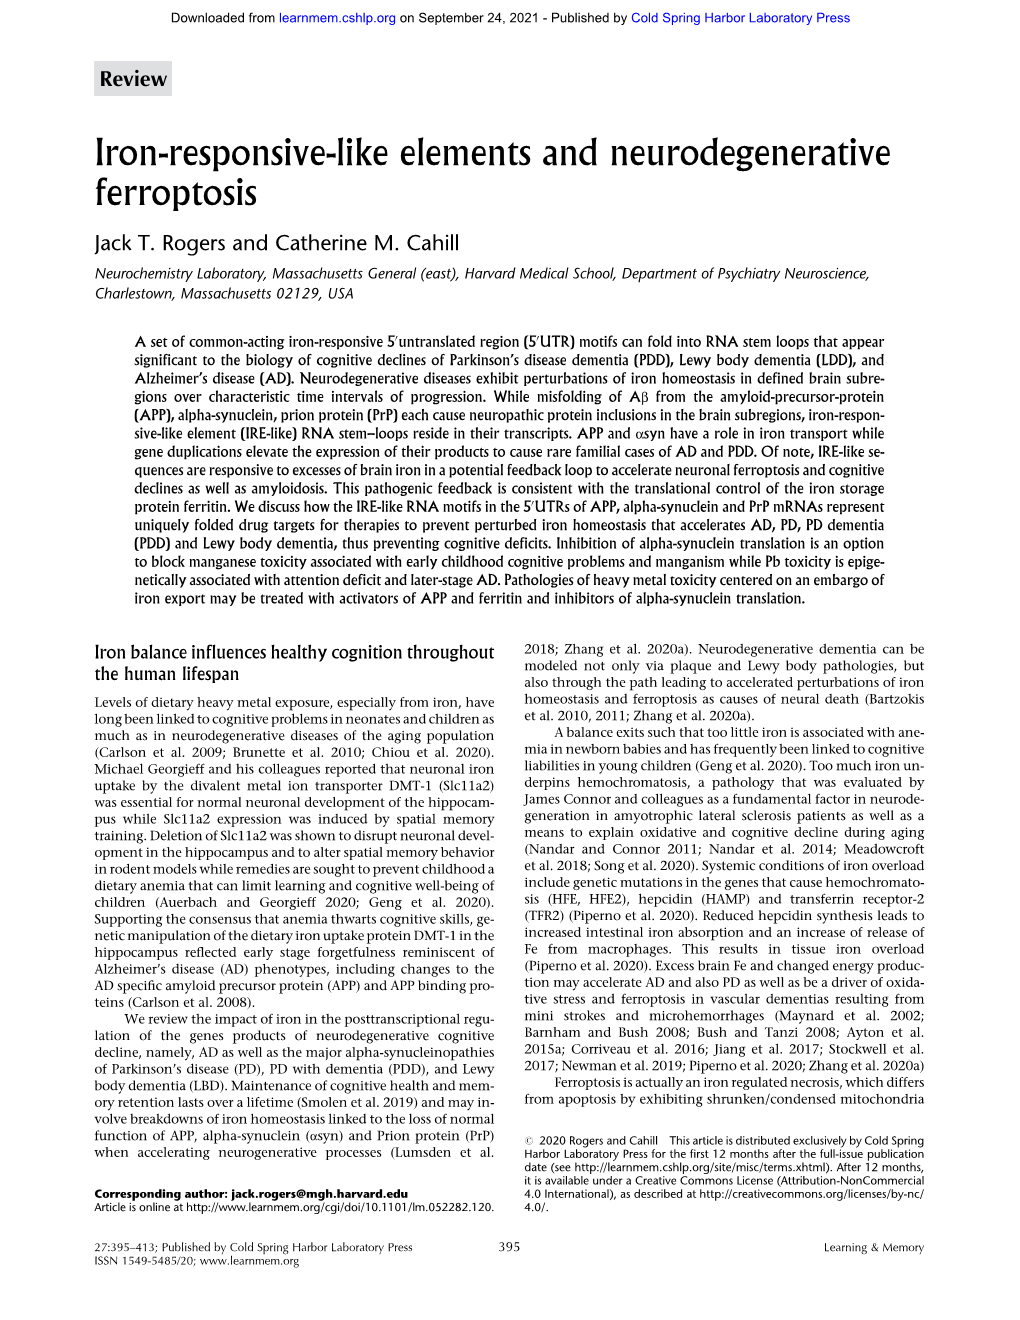 Iron-Responsive-Like Elements and Neurodegenerative Ferroptosis